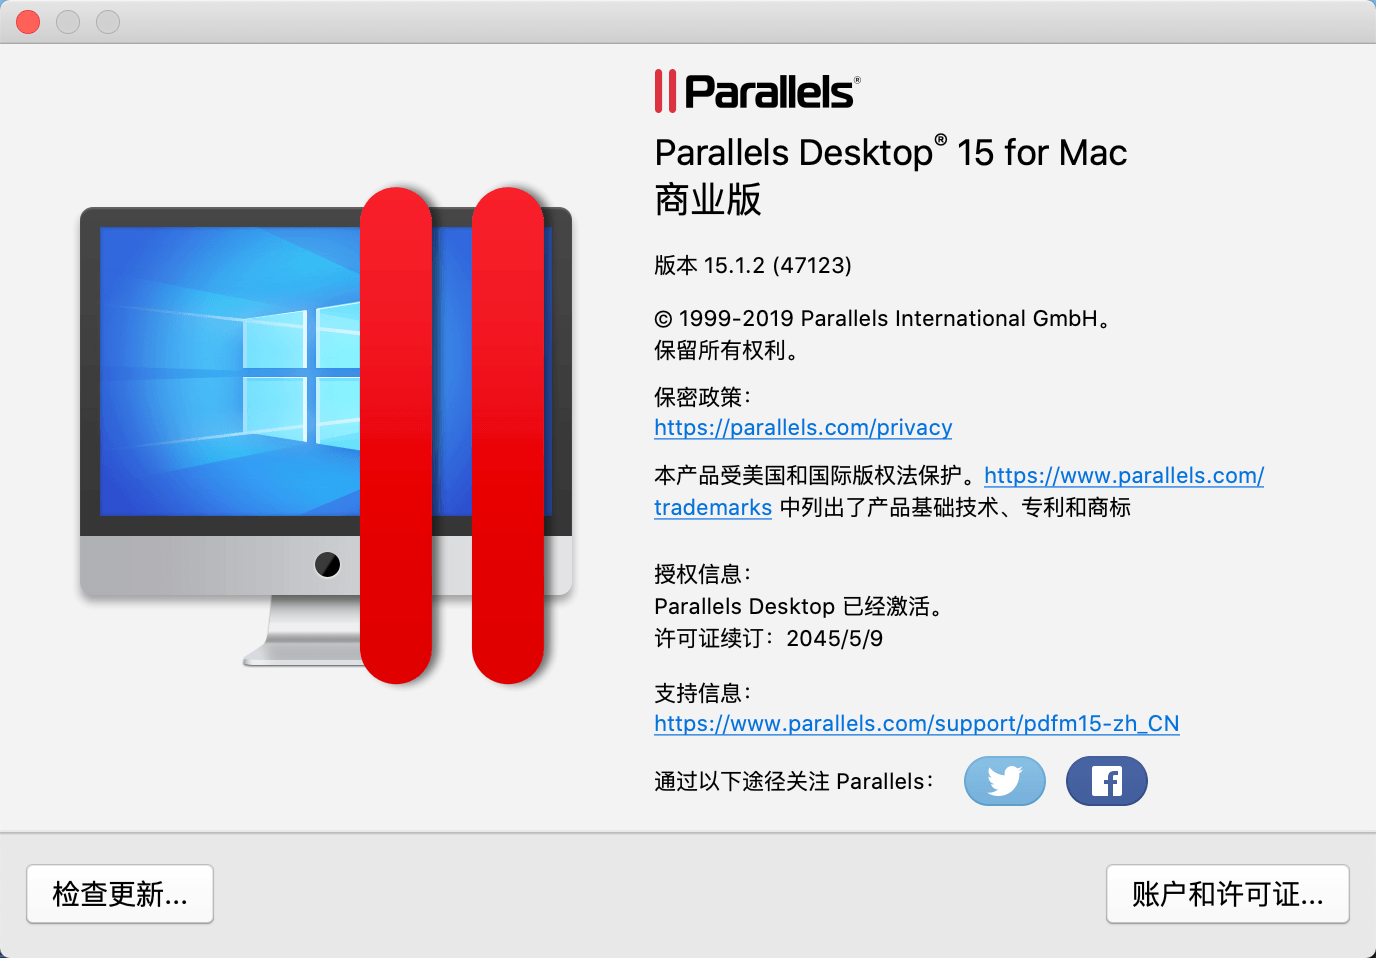 parallels desktop 17 free